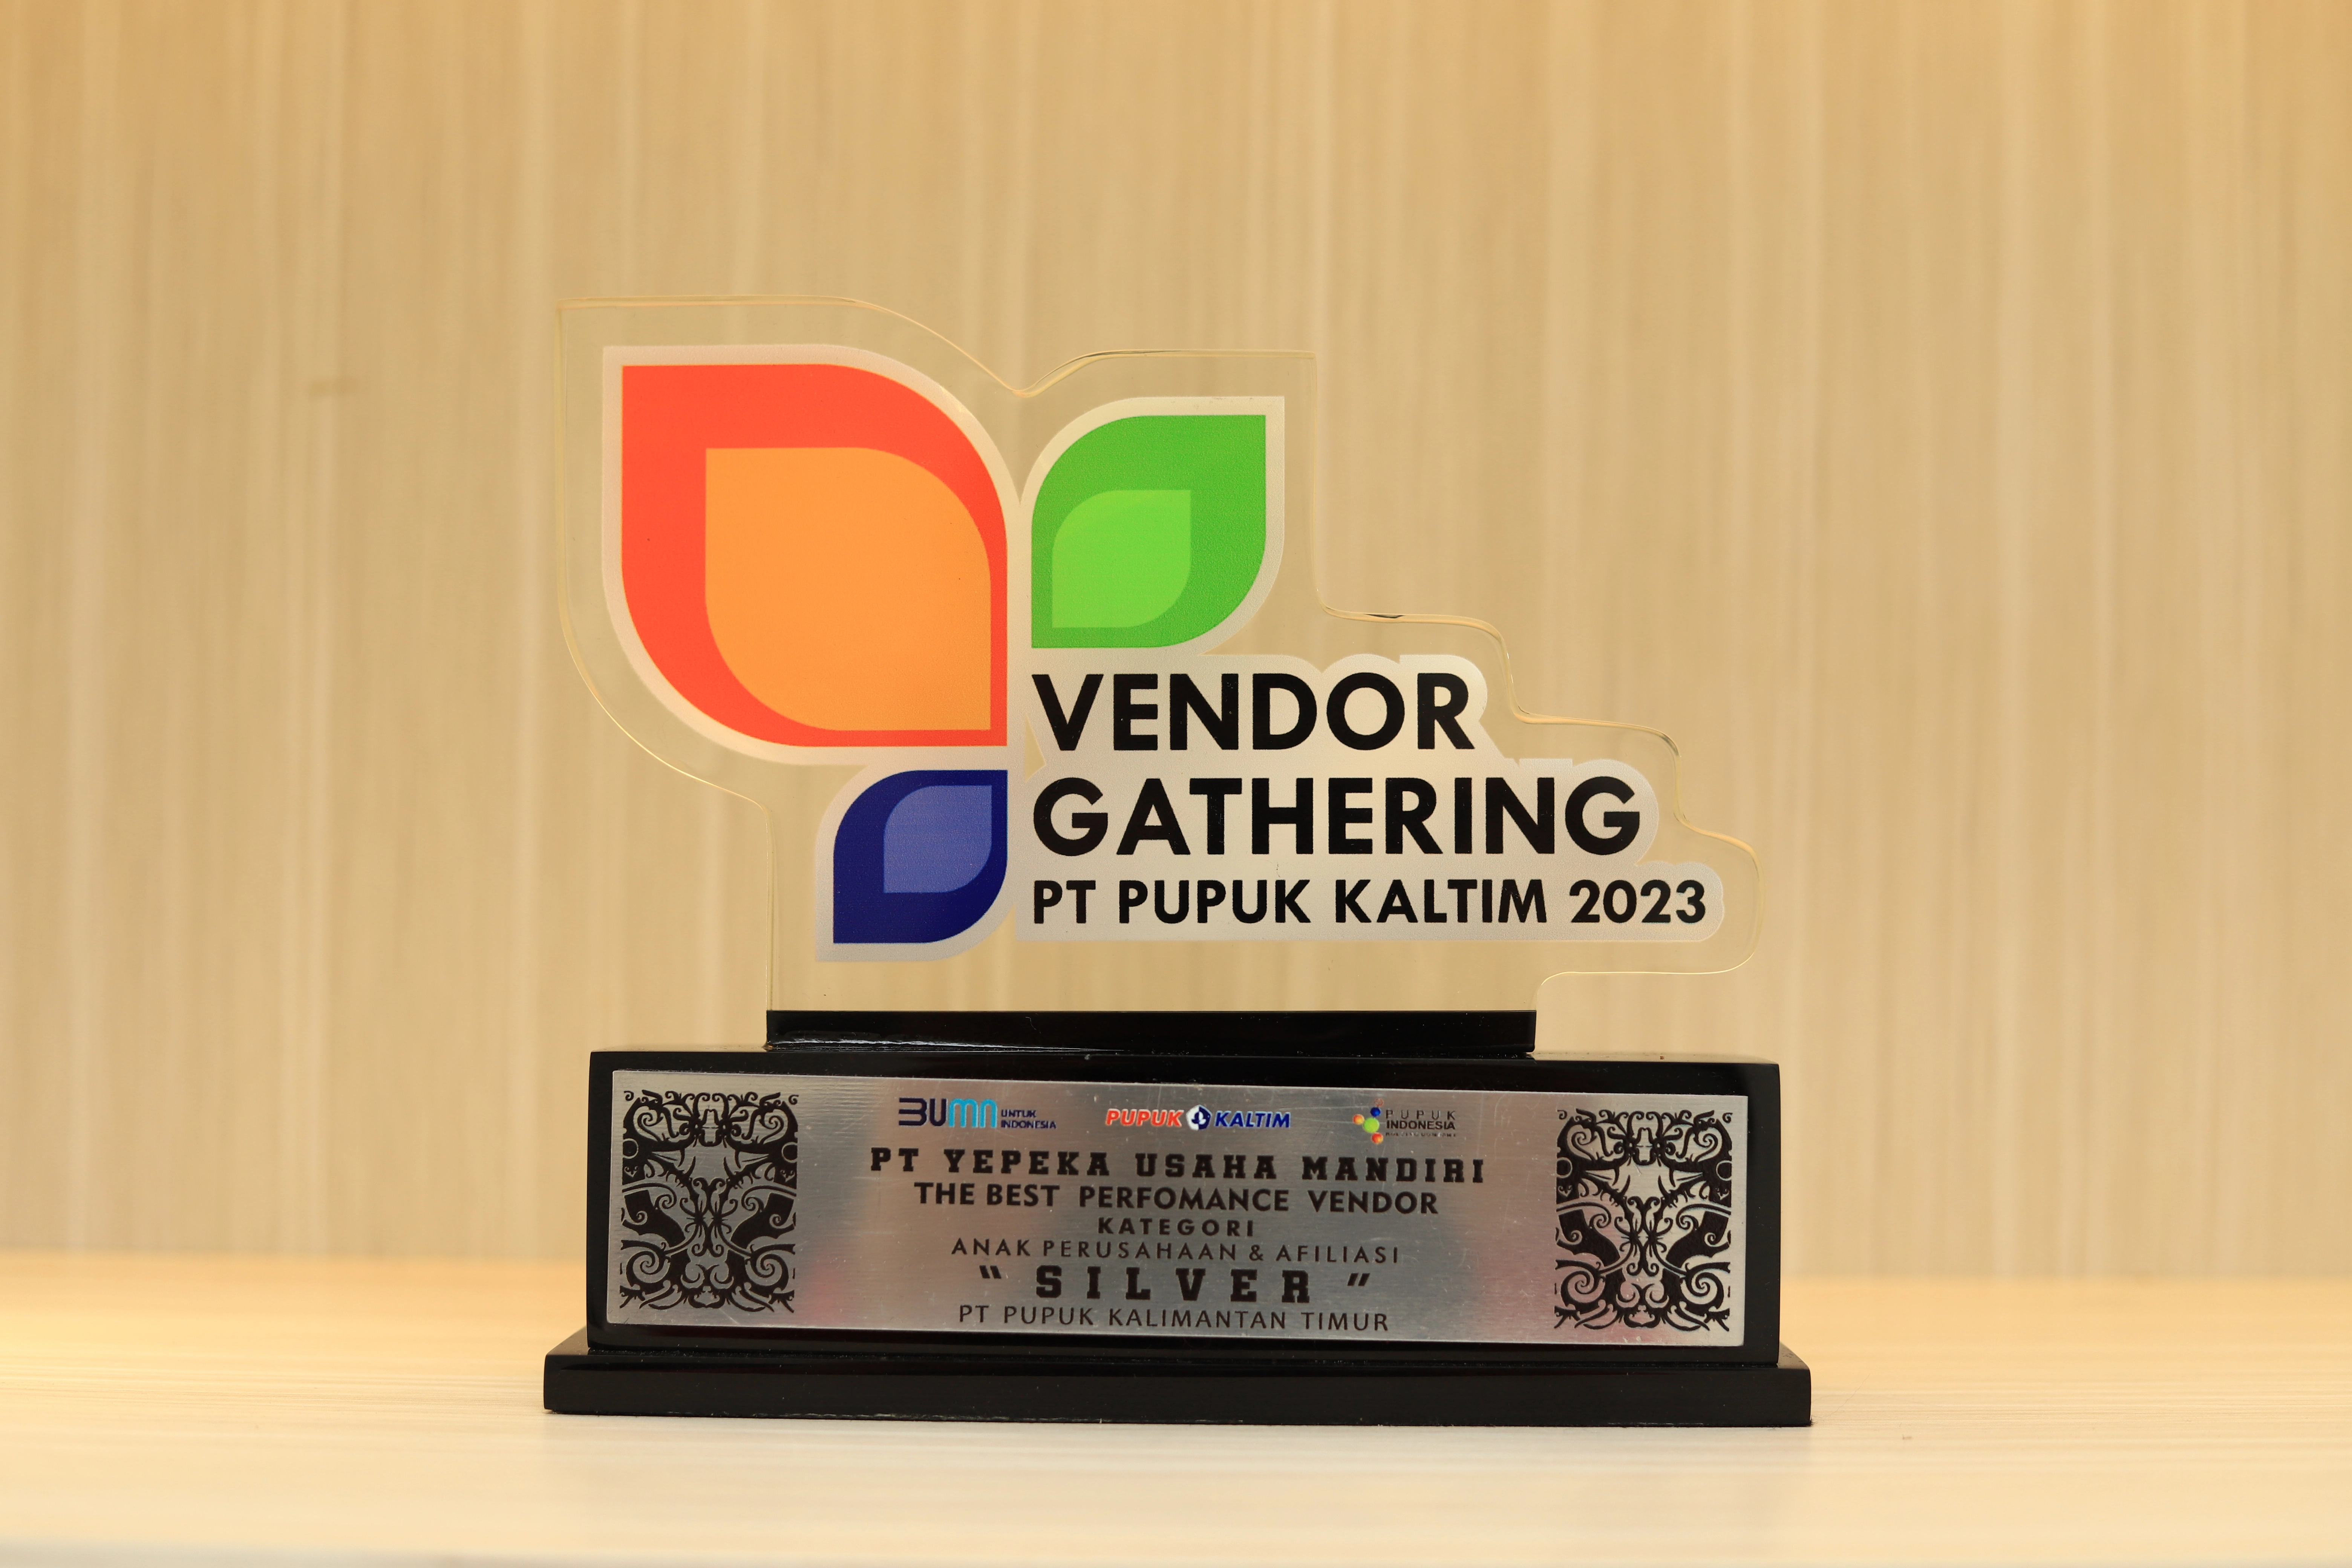 Penghargaan - Vendor Gathering PT Pupuk Kaltim 2023